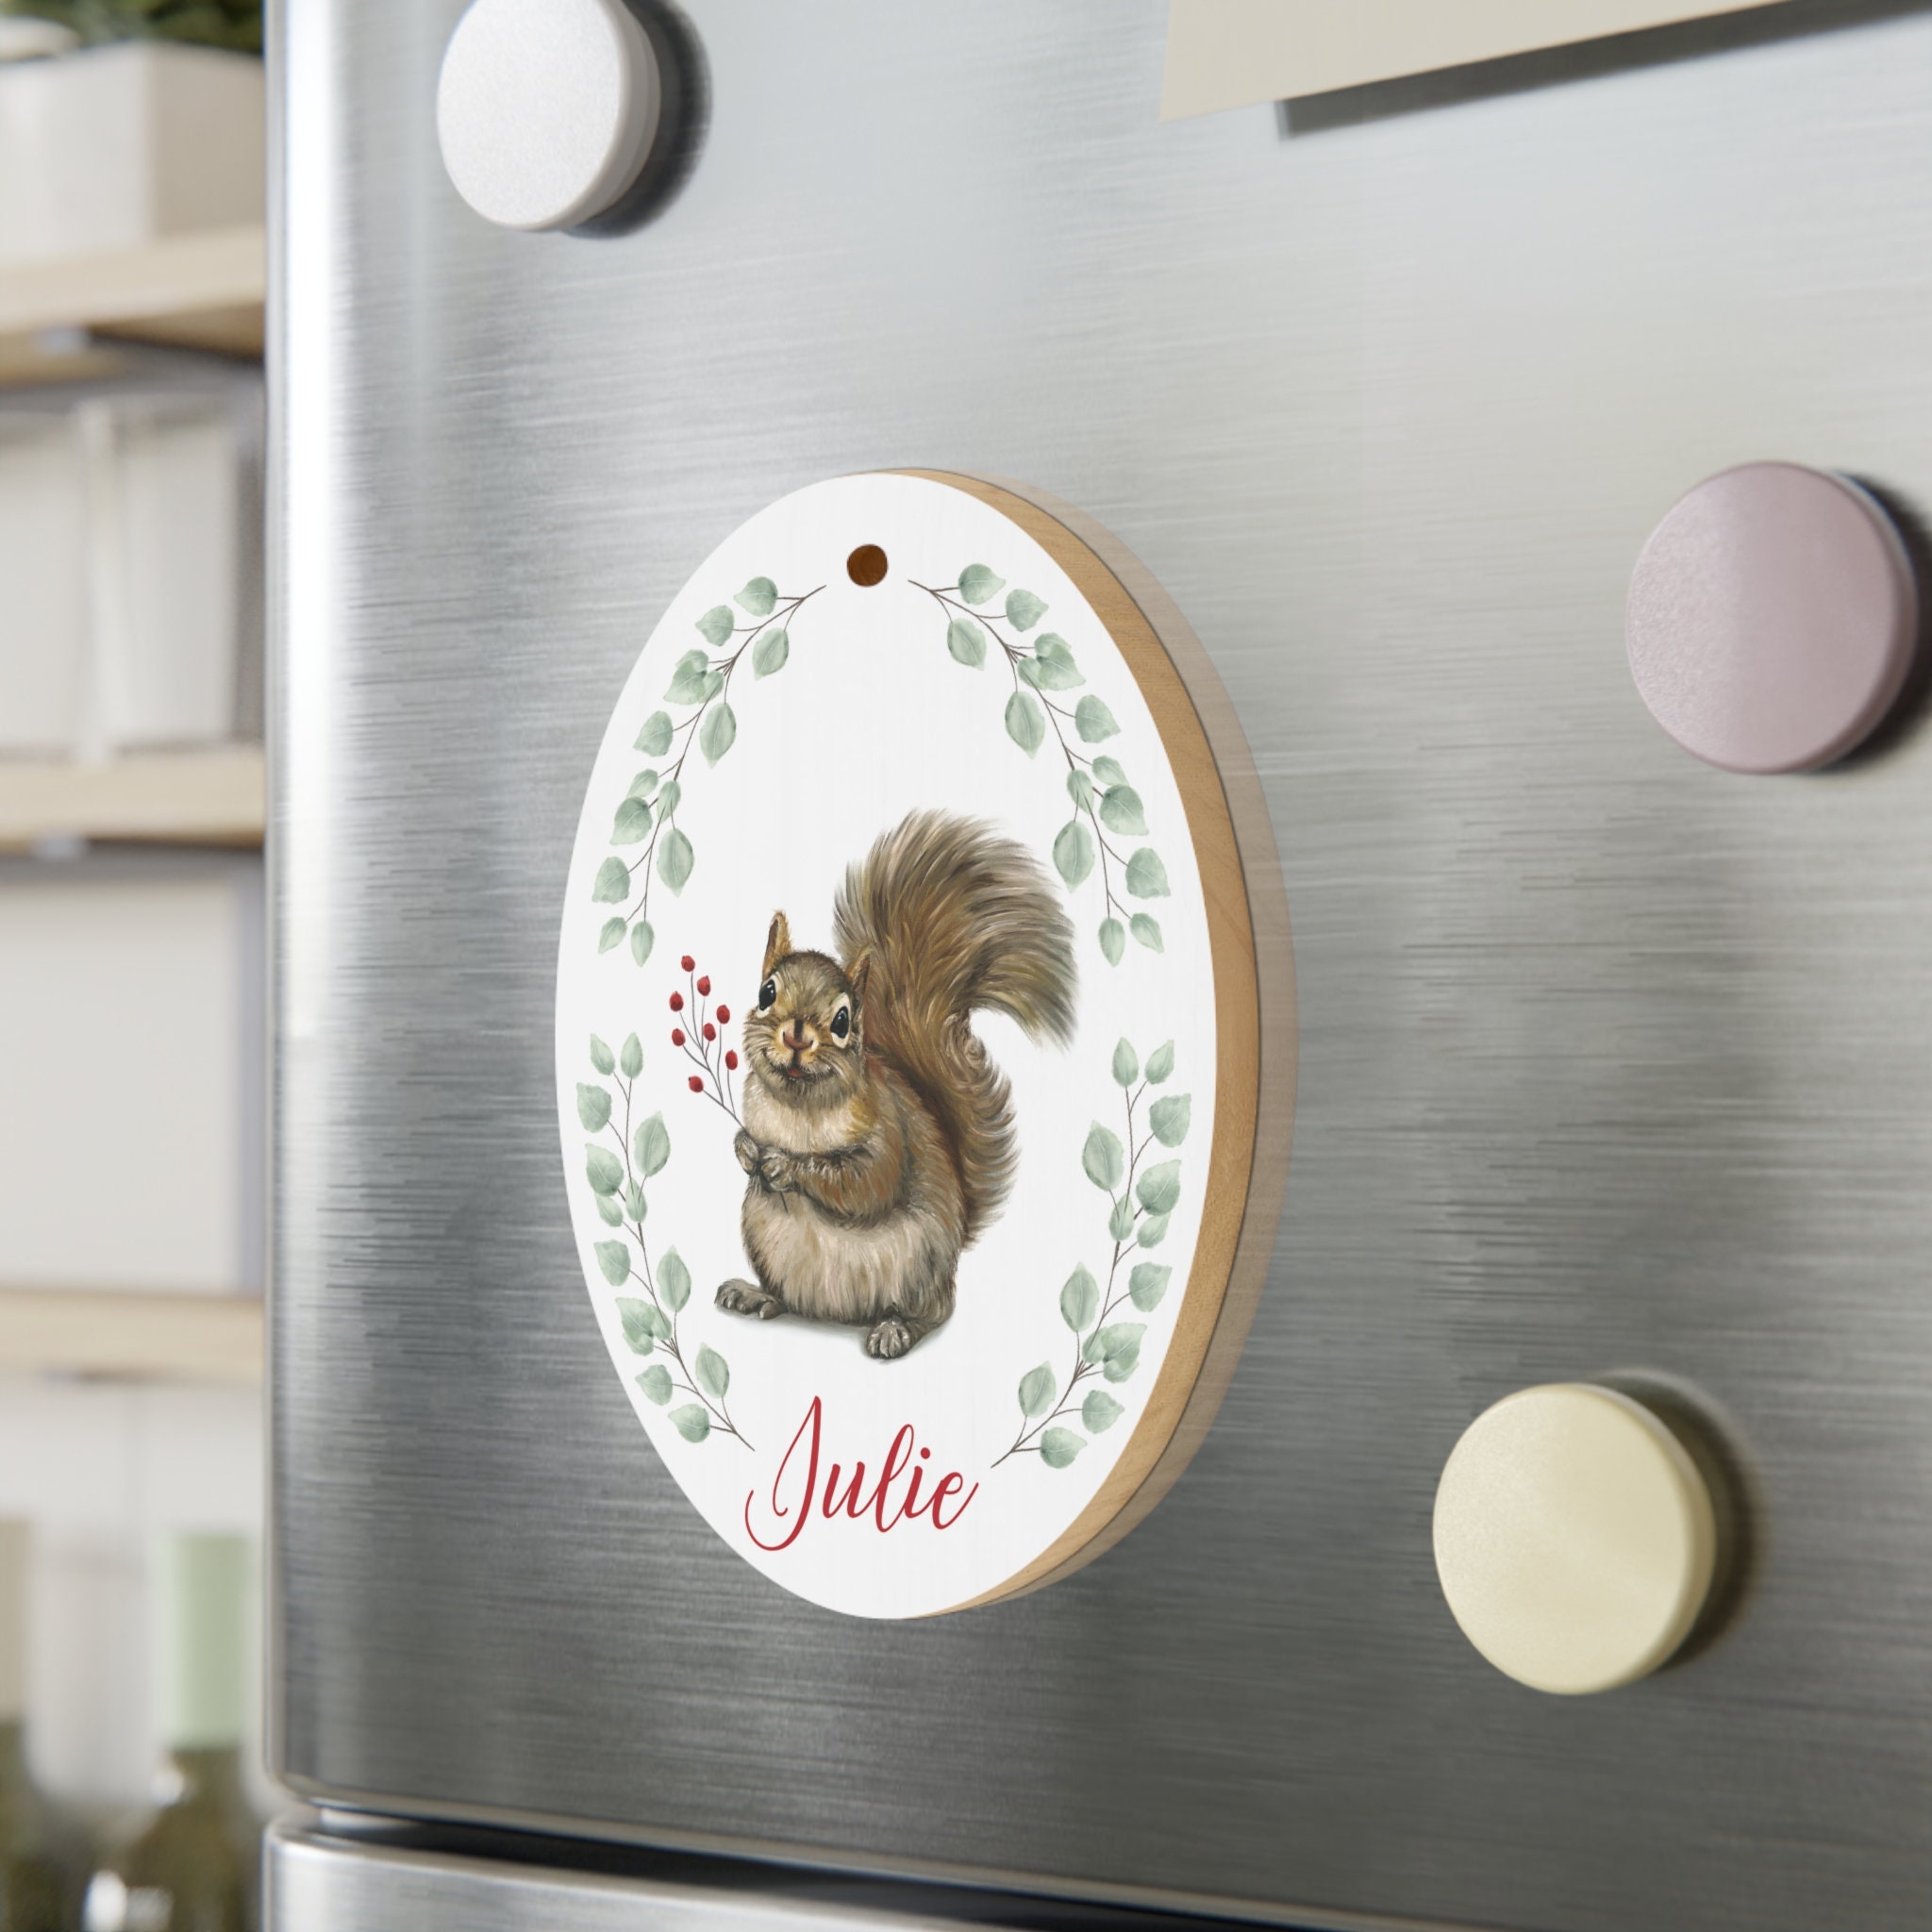 Discover Custom squirrel Christmas ornament, personalized squirrel ornament